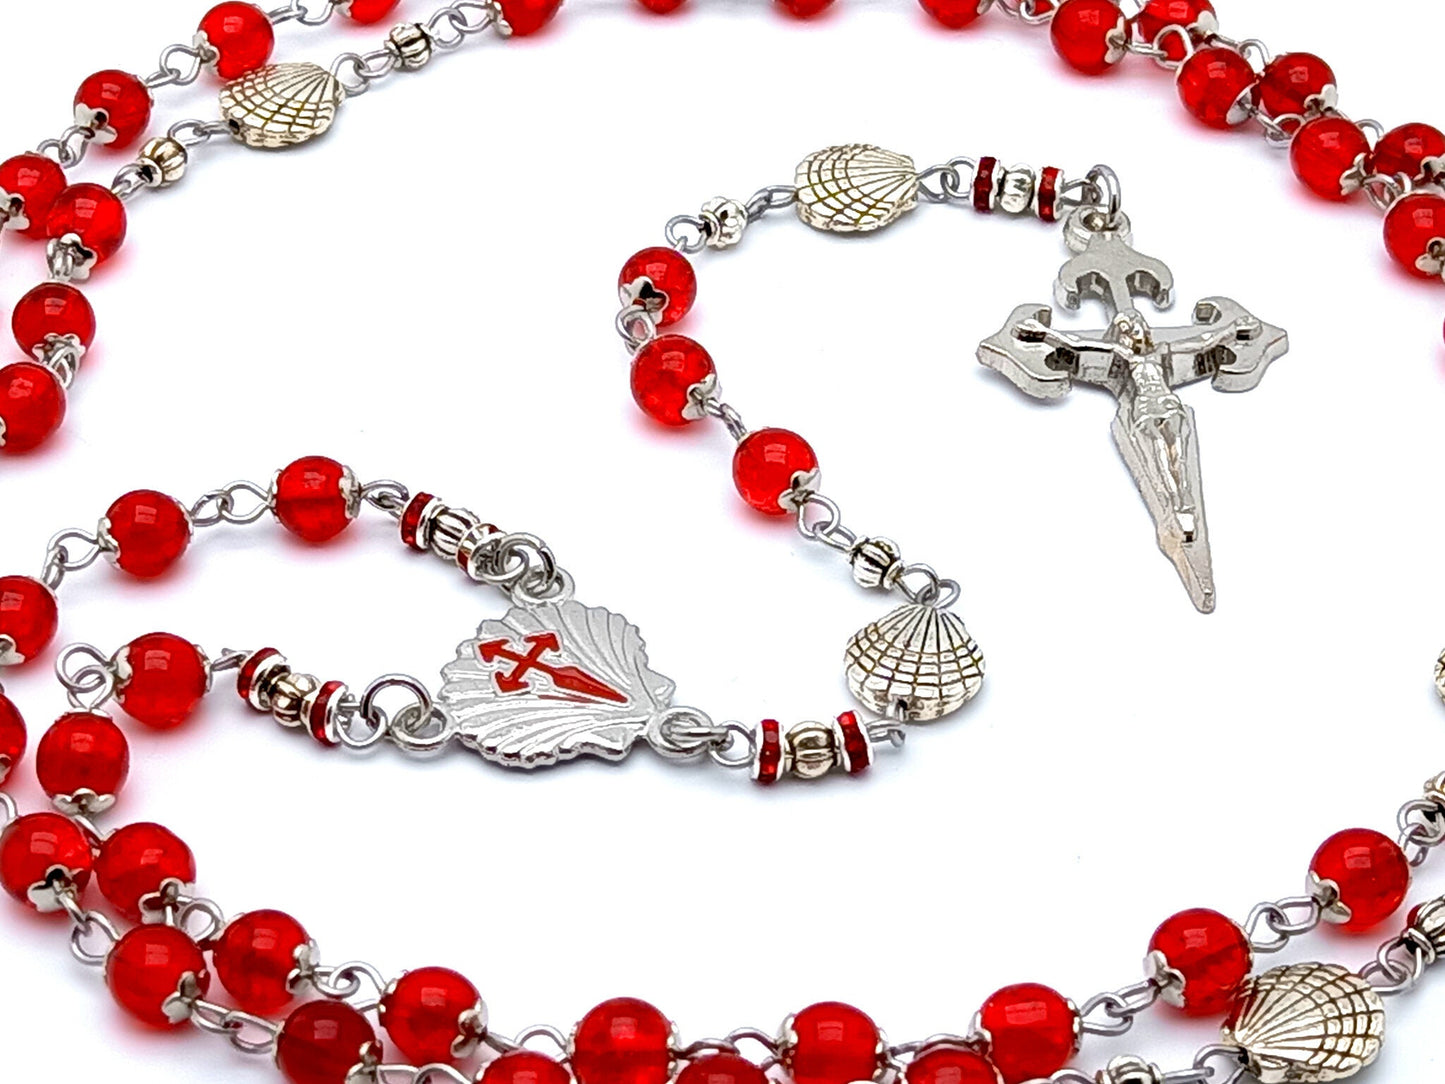 Saint James unique rosary beads with red glass beads and Santiago de Compostela pilgrim shell beads and Saint James crucifix.